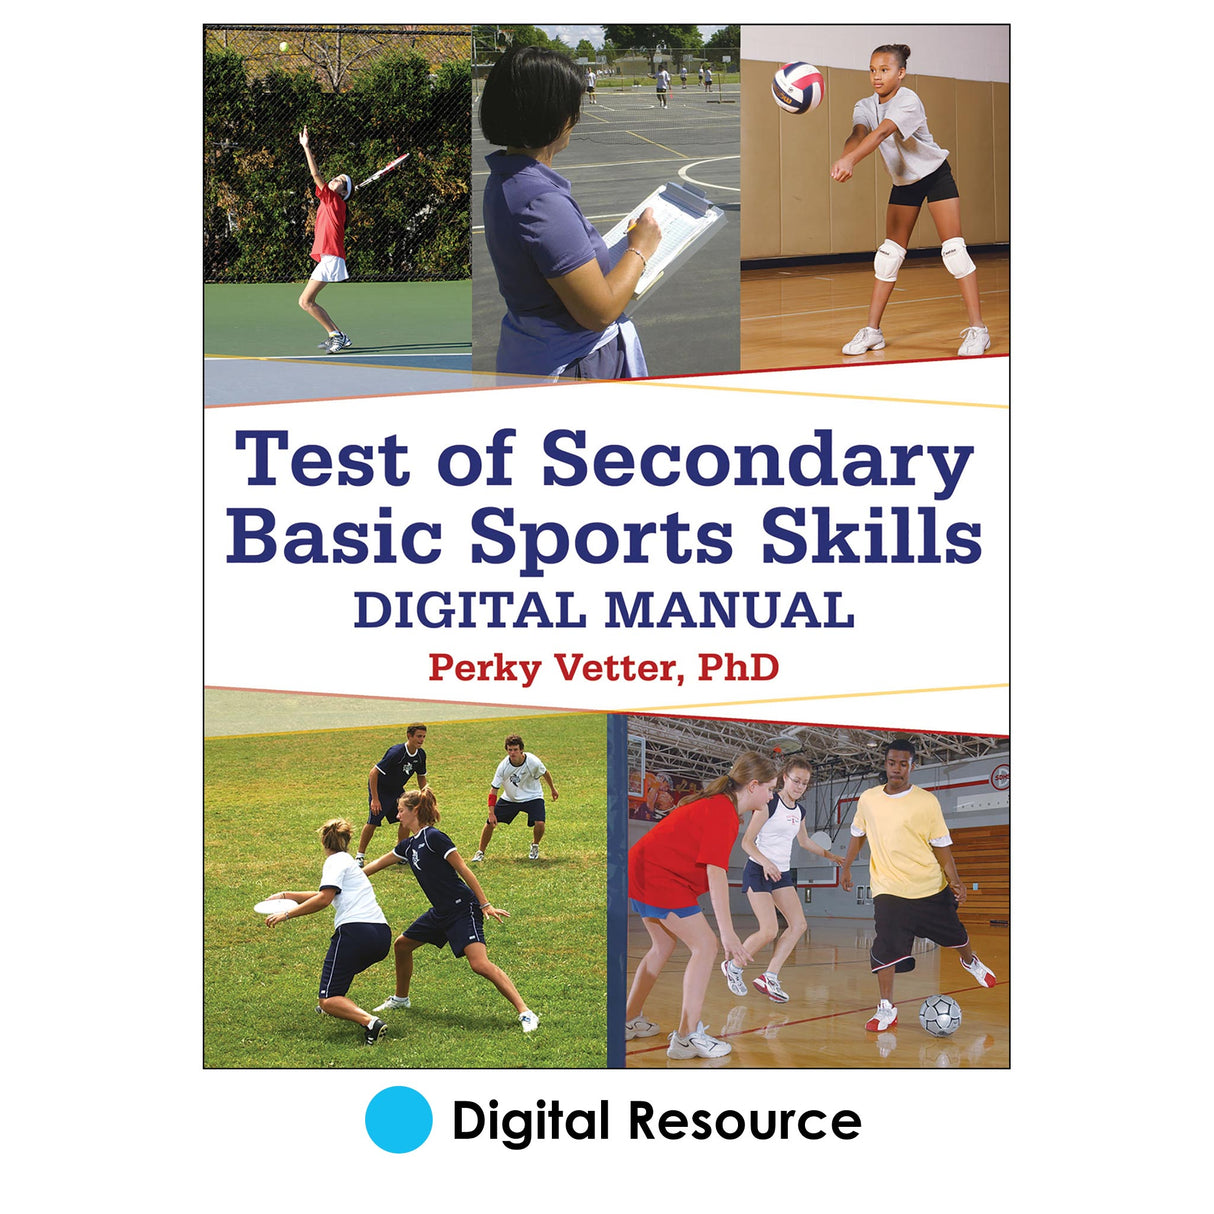 Test of Secondary Basic Sports Skills Digital Manual